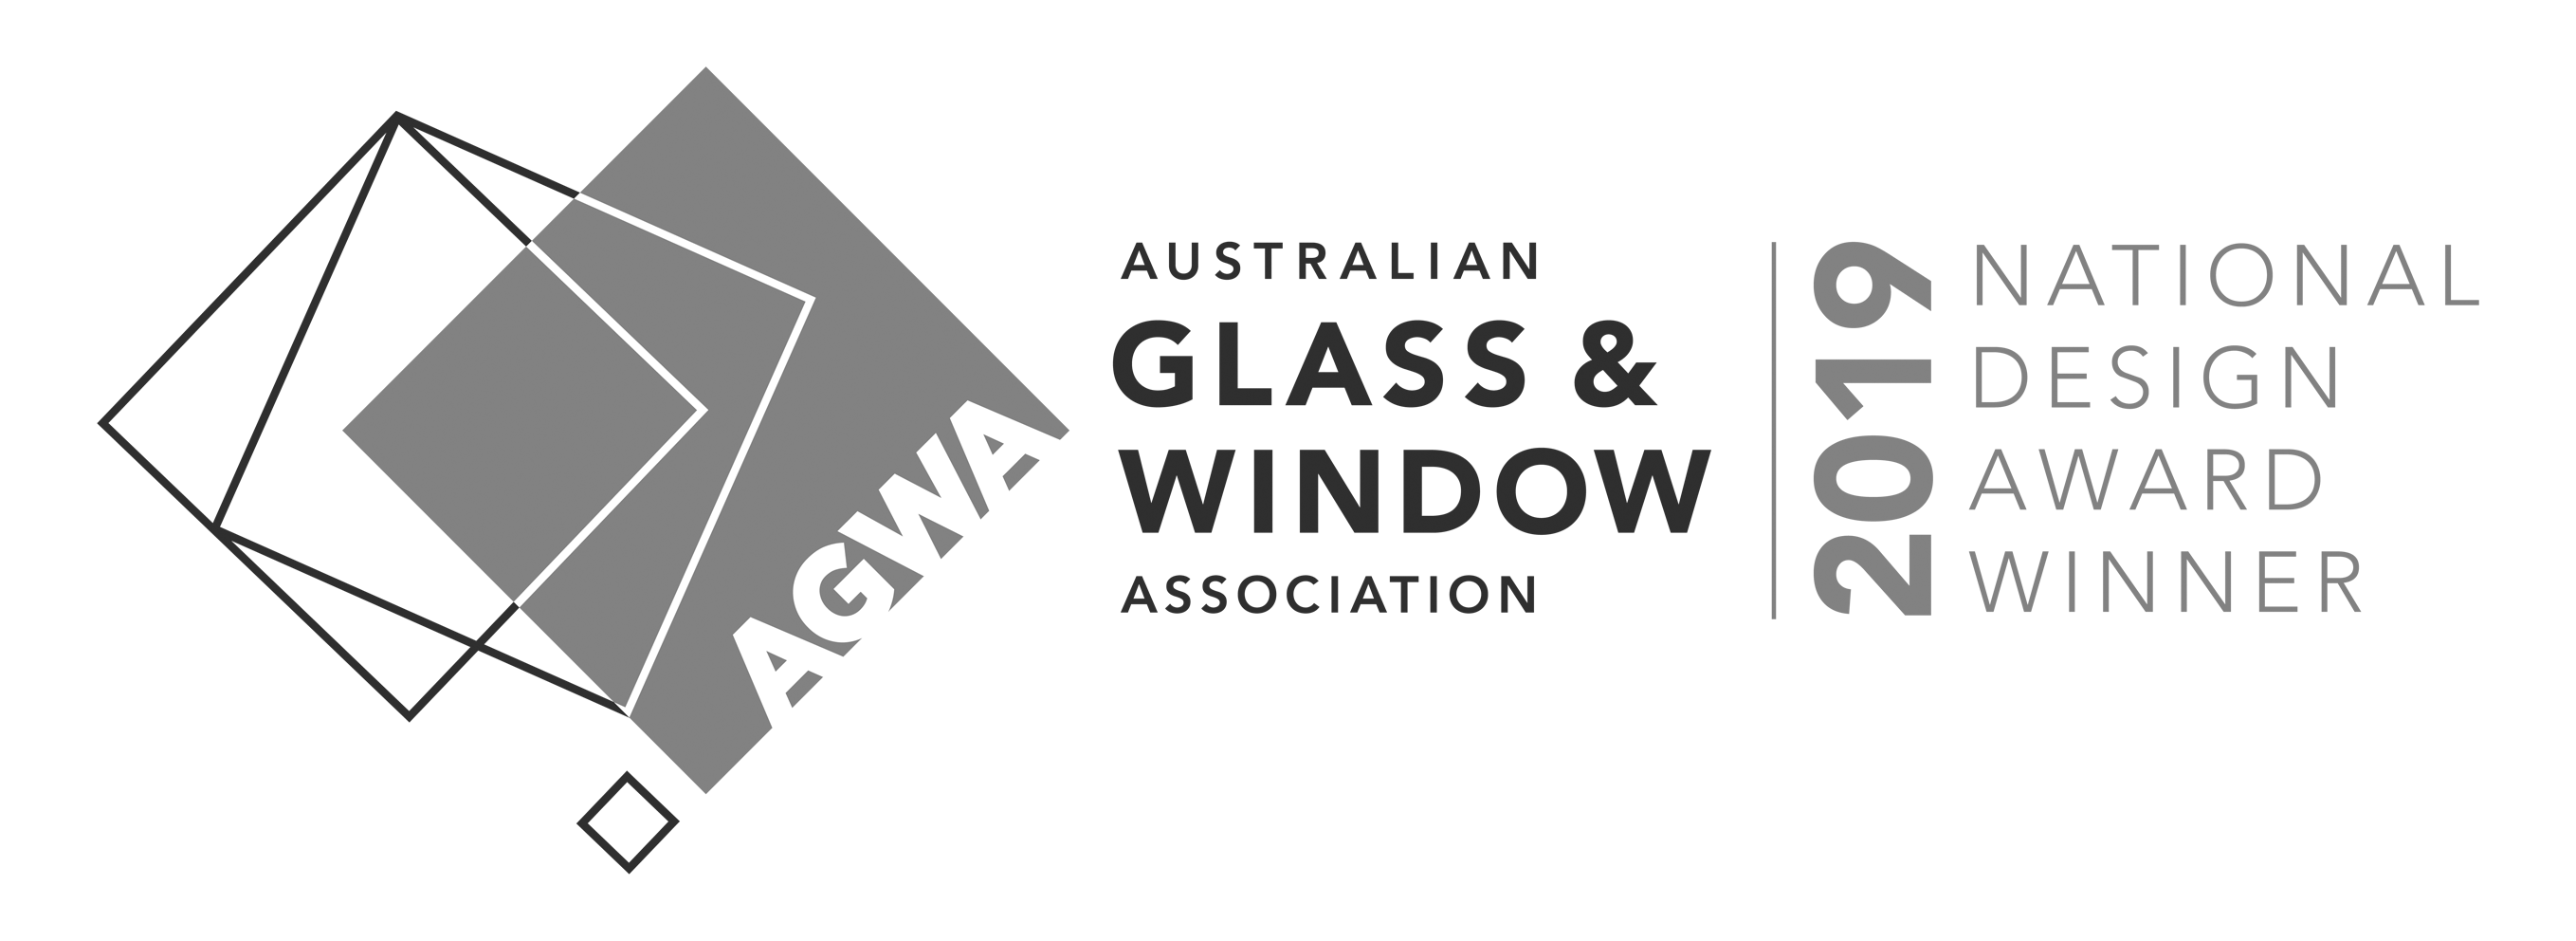 AGWA Glass & Window Assocation 2019 National Design Award Winner Logo in Black and White